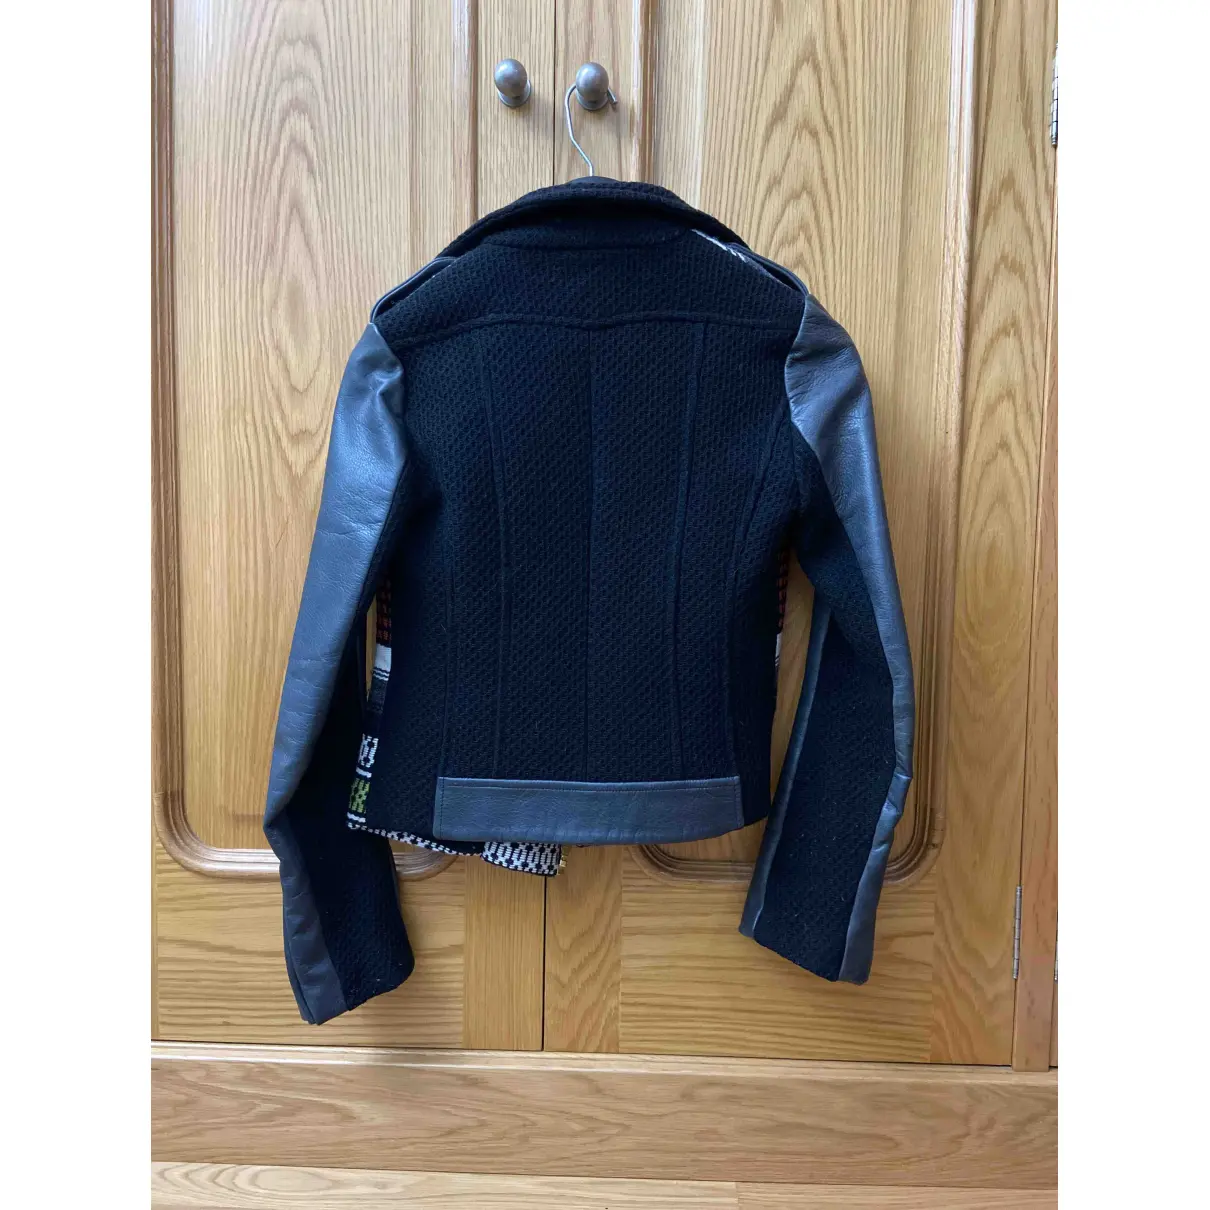 Buy Maje Leather biker jacket online